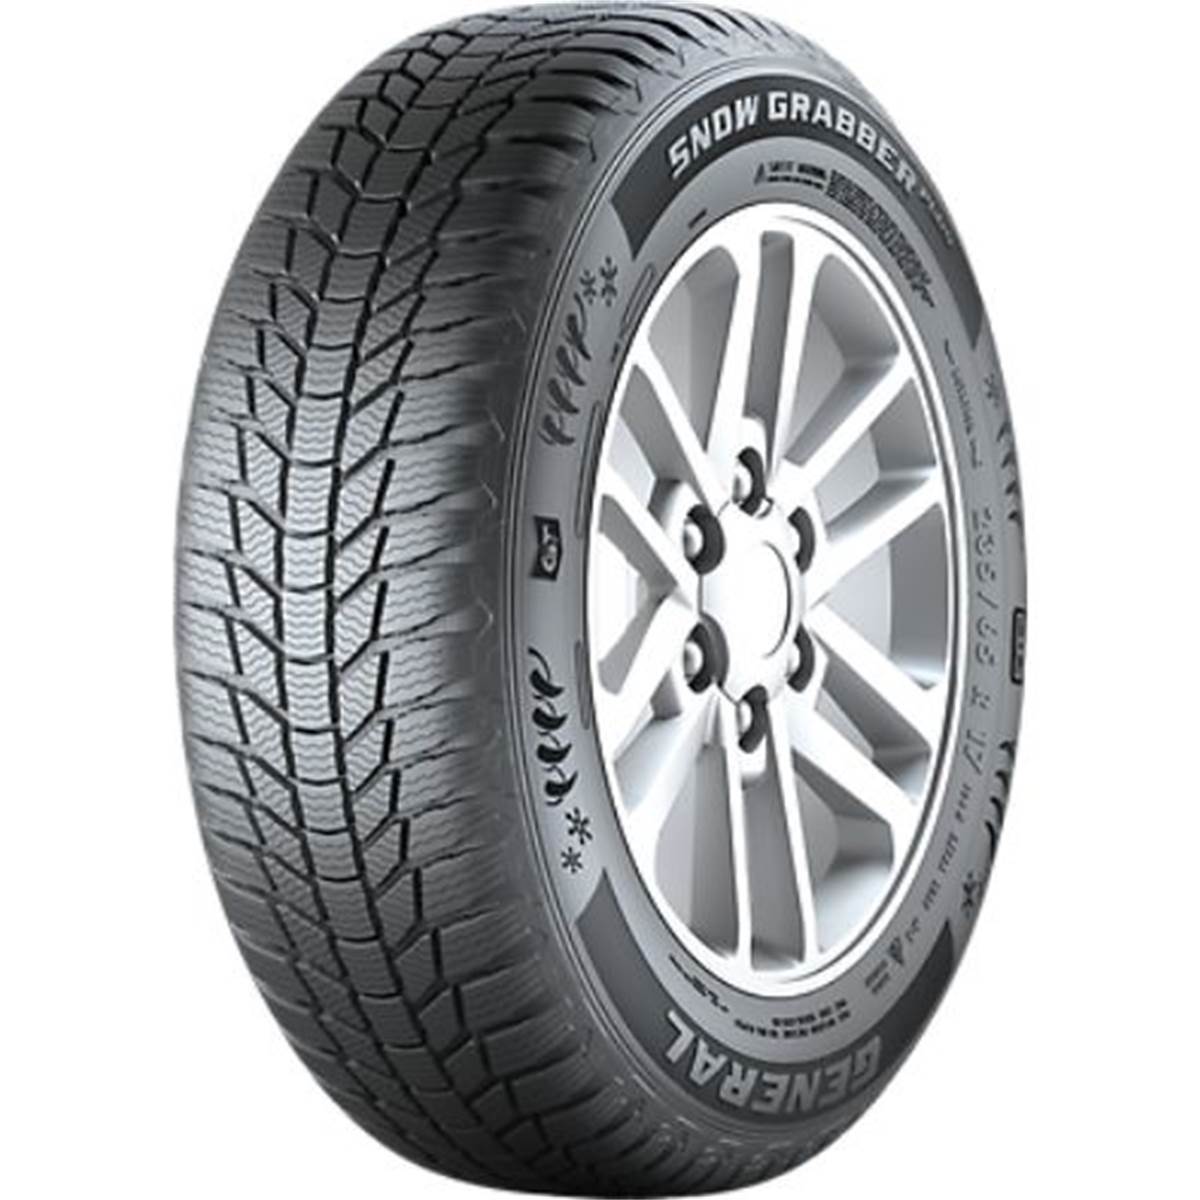 General Tire Neumático  Snow Grabber Plus 265/70R16 112H